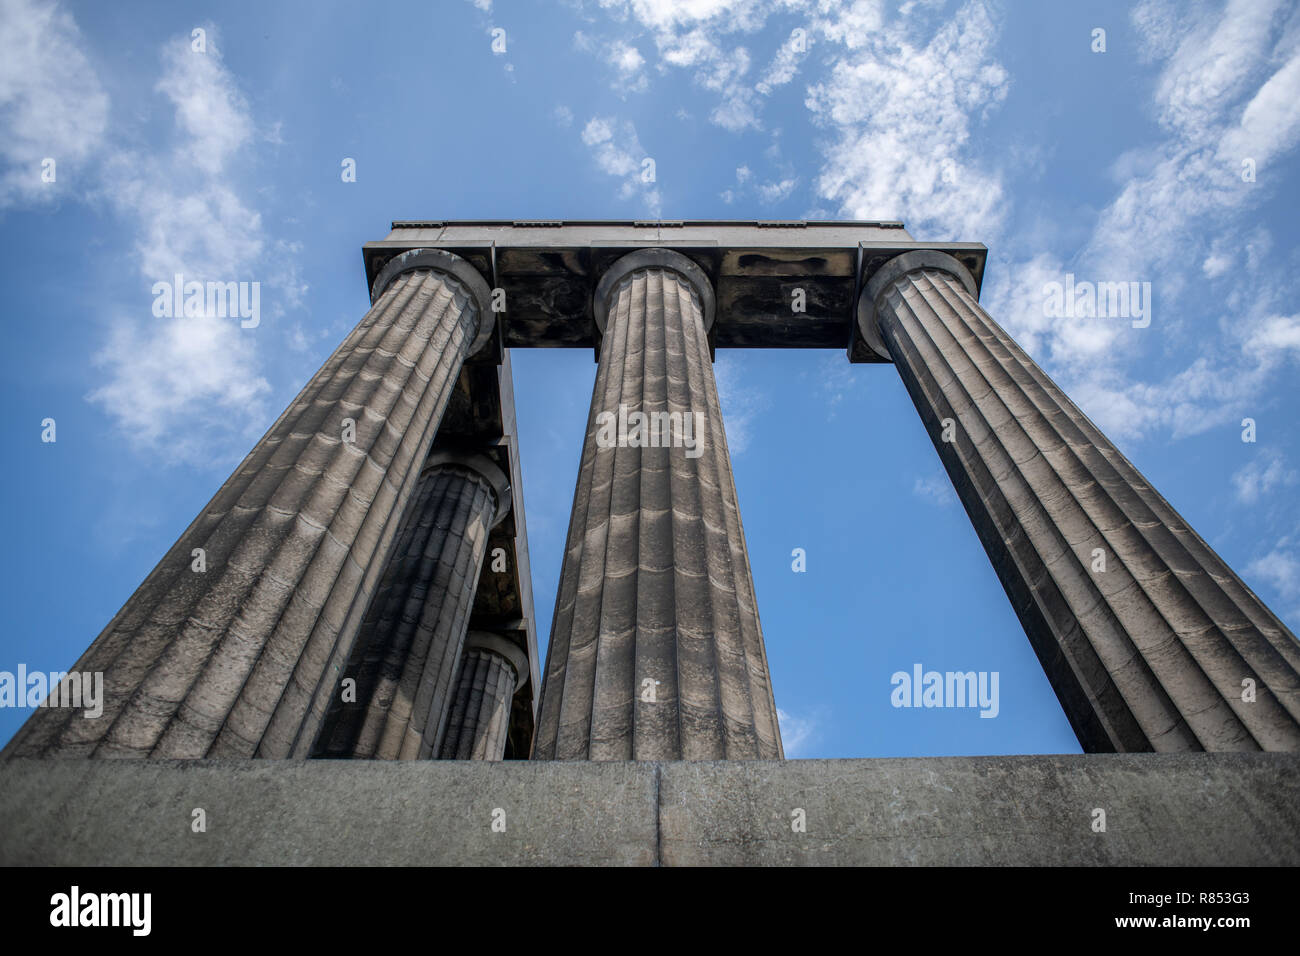 The doric columns of the National Monument of Scotland towers above visitors, Edinburgh, Scotland, UK. Stock Photo